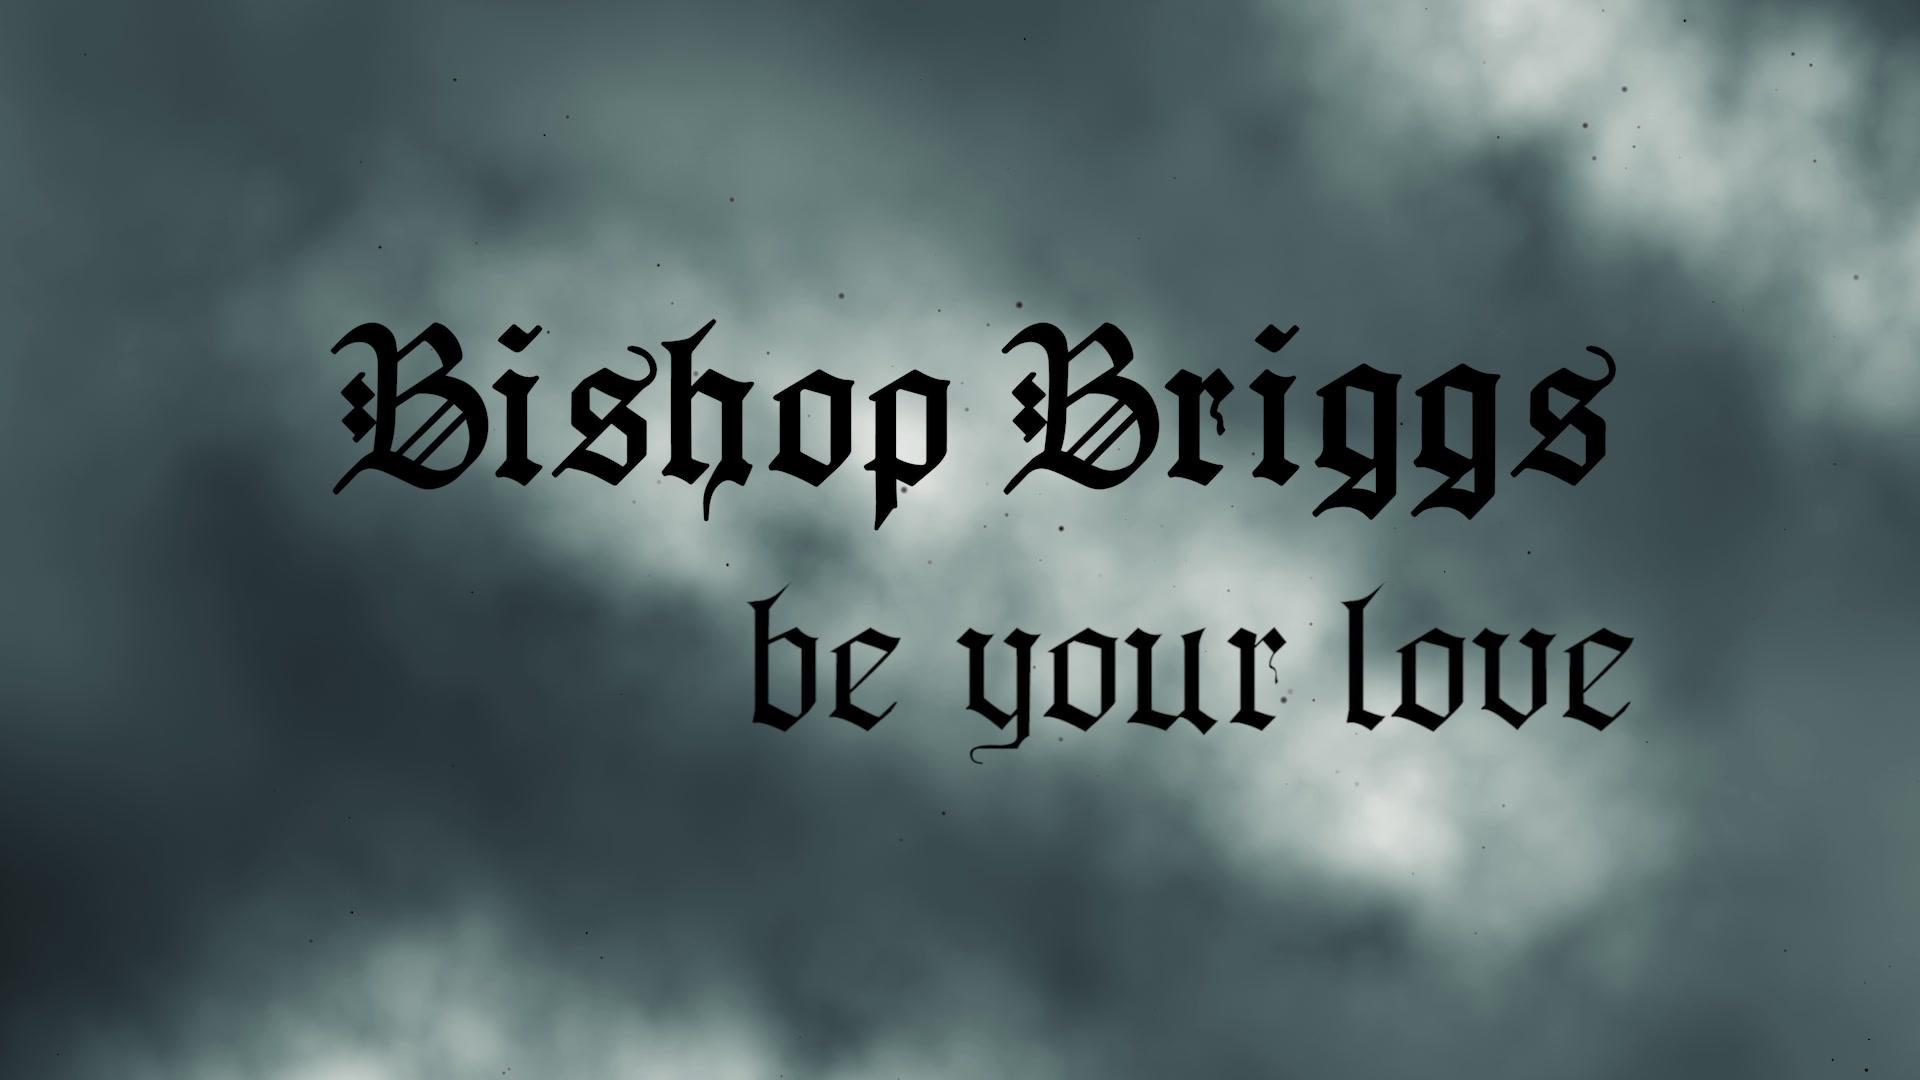 Bishop Briggs - Be Your Love (Lyric Video)